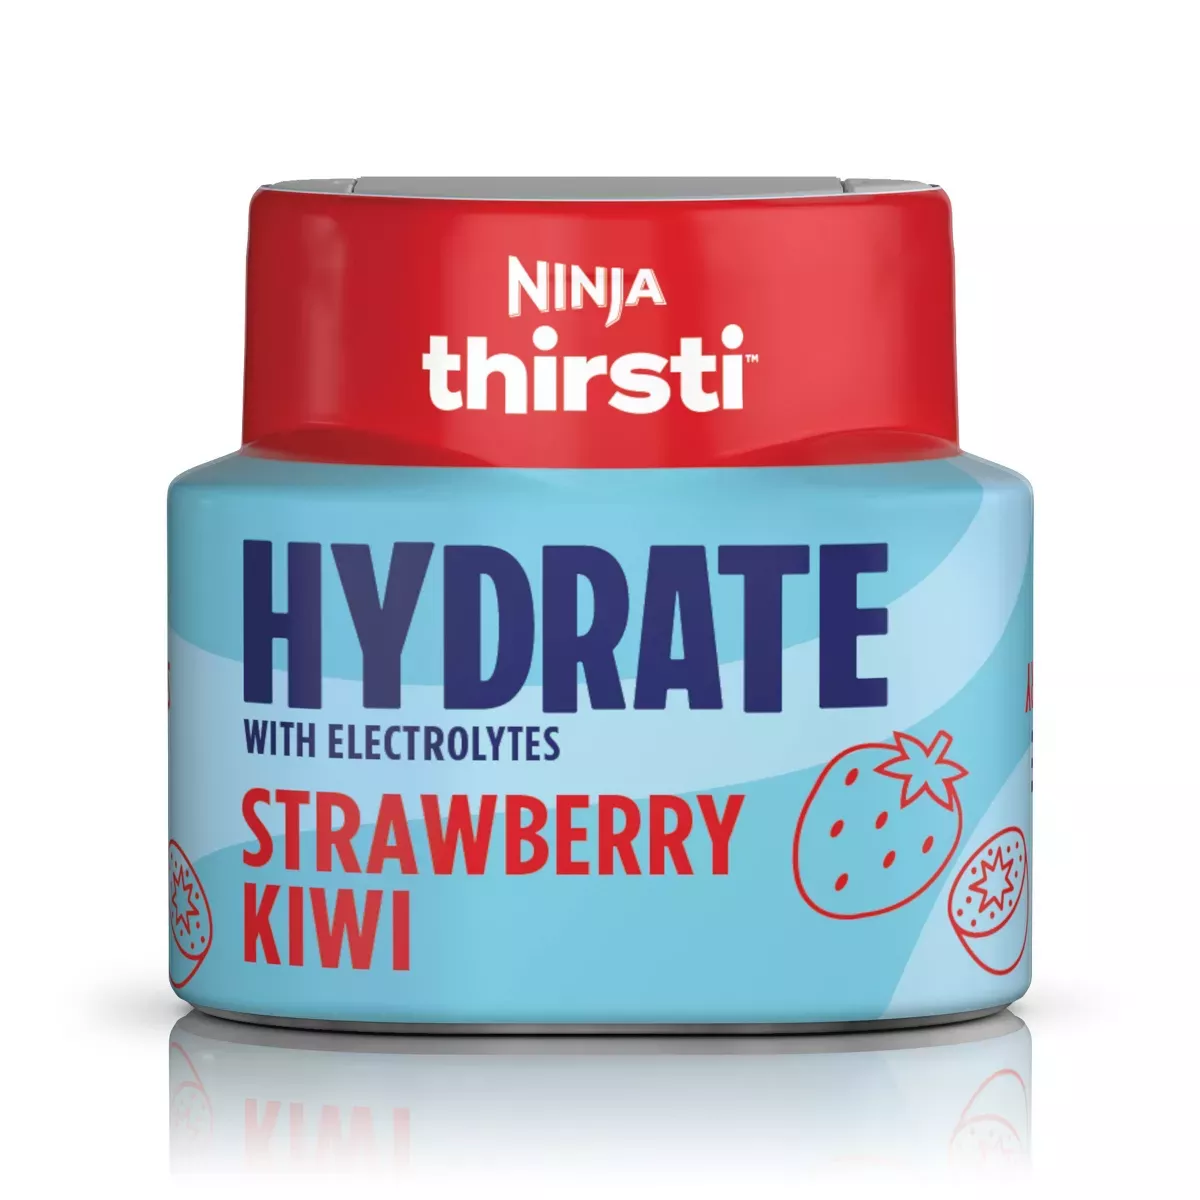 What I drink in a day #SponsoredByNinja featuring the New @NinjaKitche, ninja thirtsi